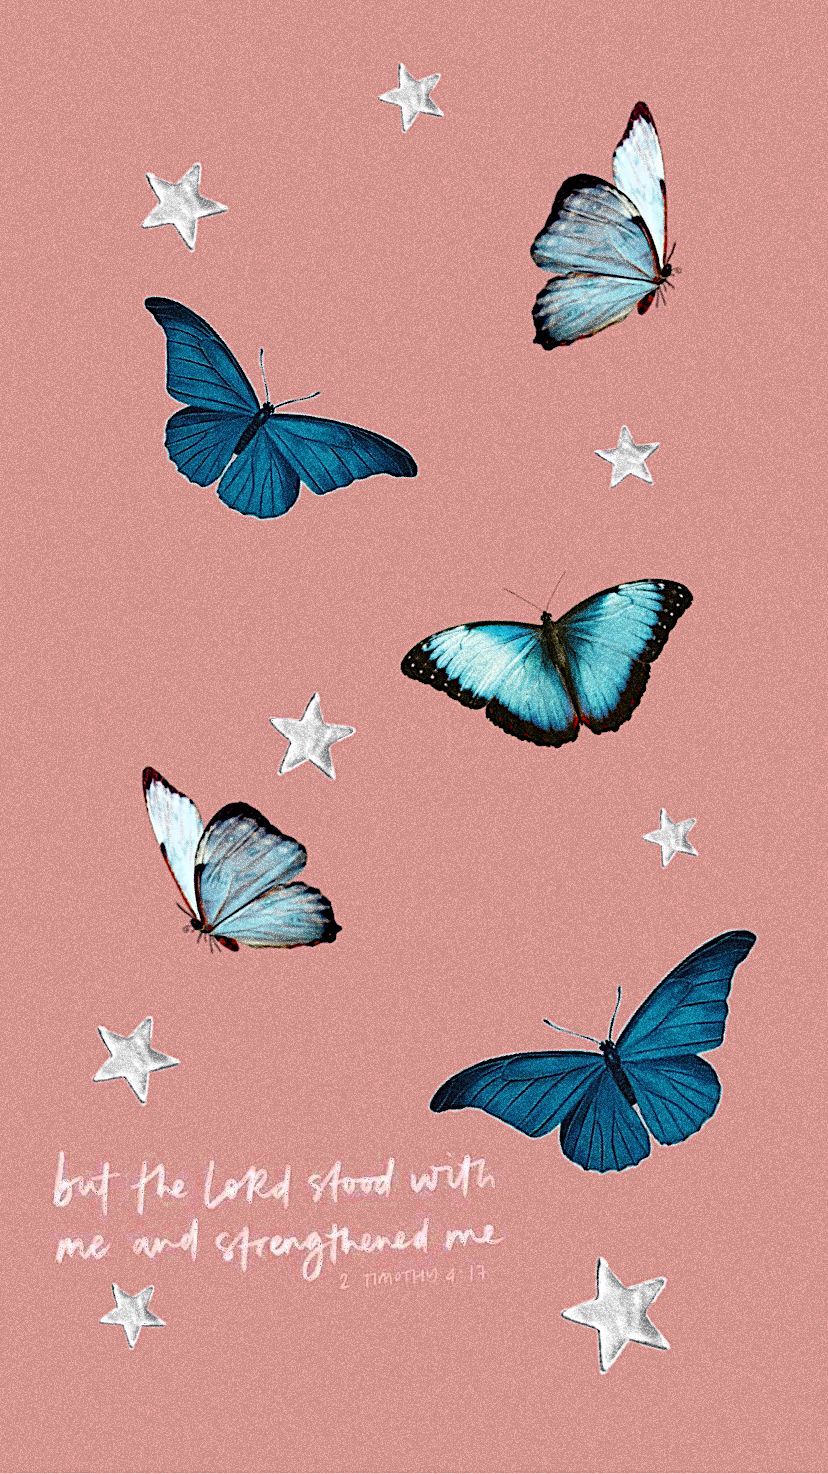 Christian vsco faith wallpaper iPhone blue butterflies stars